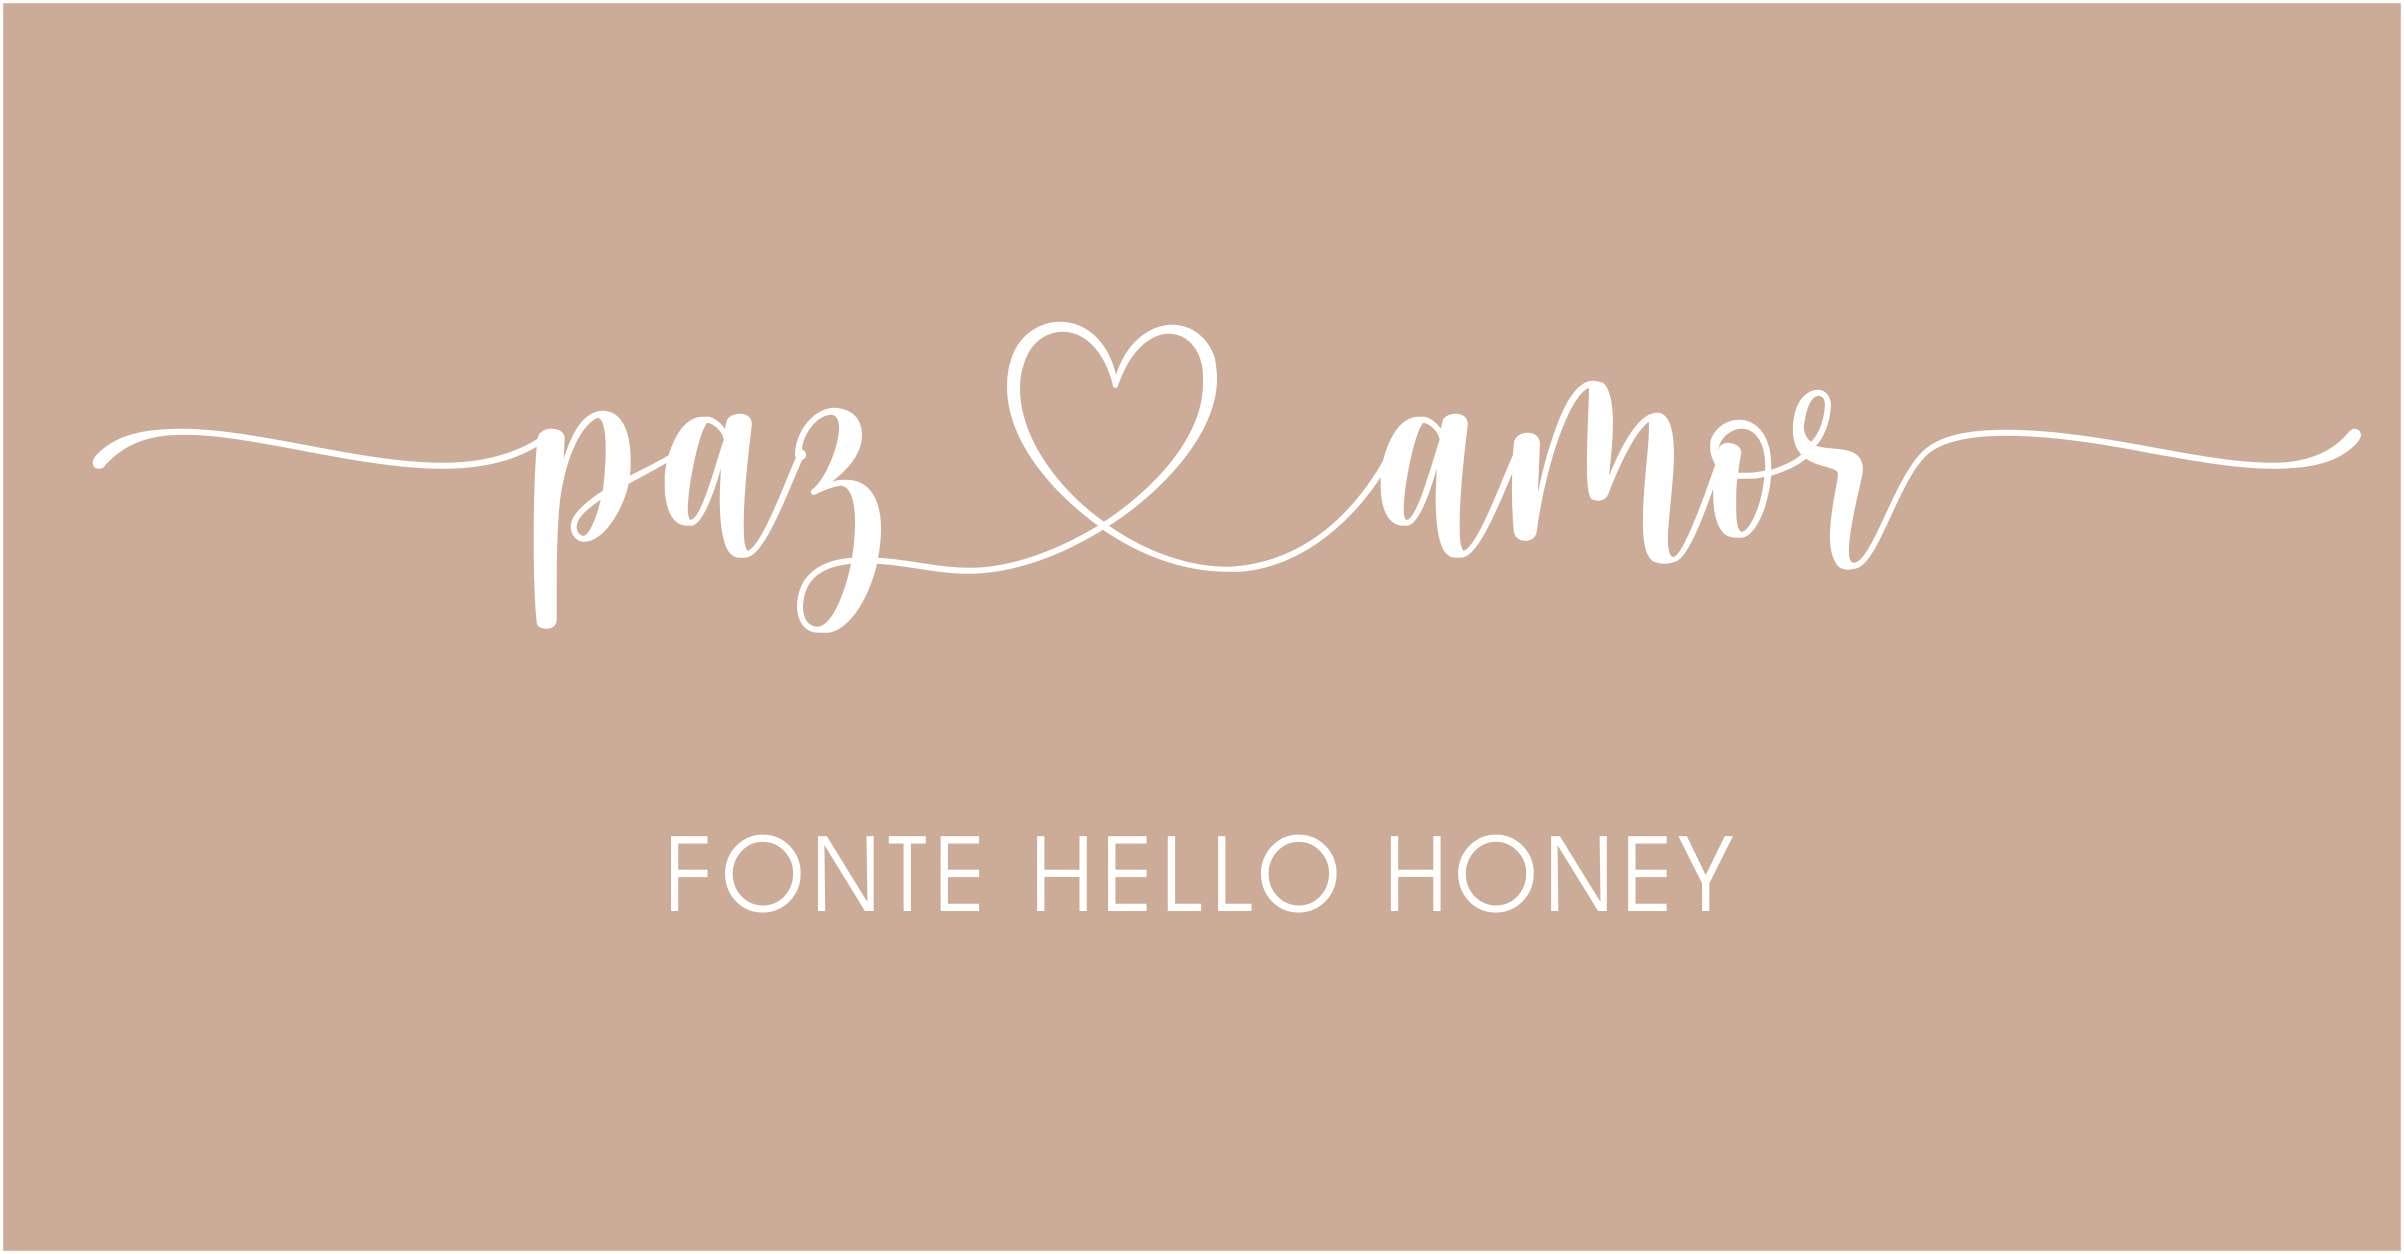 Letras com rabinhos para convites de casamento Hello Honey